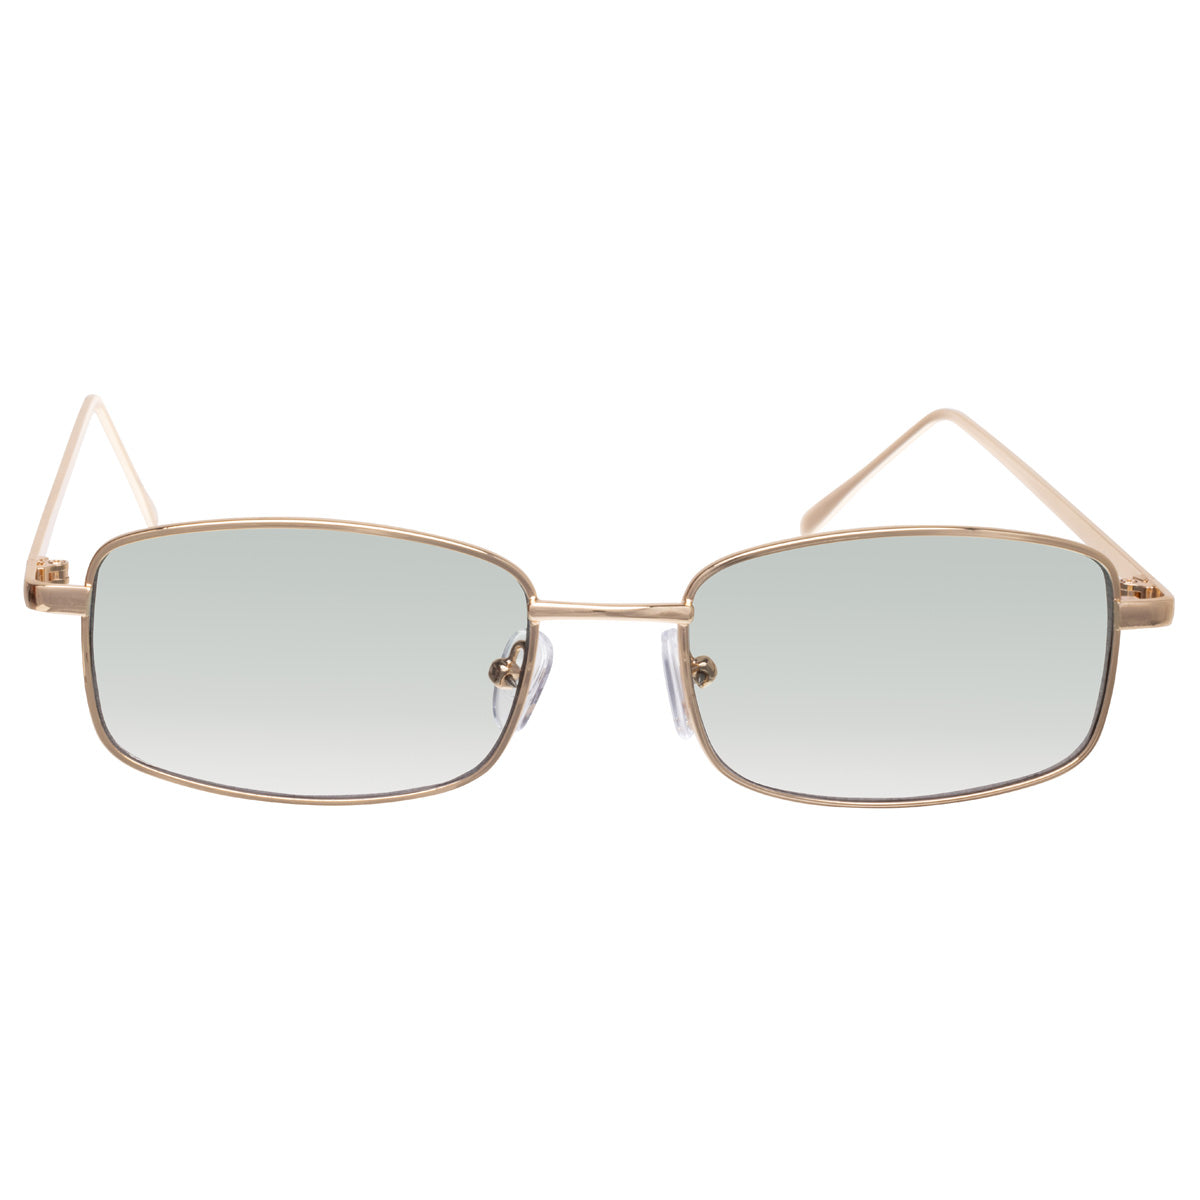 Low rectangular sunglasses with sliding coloured lenses